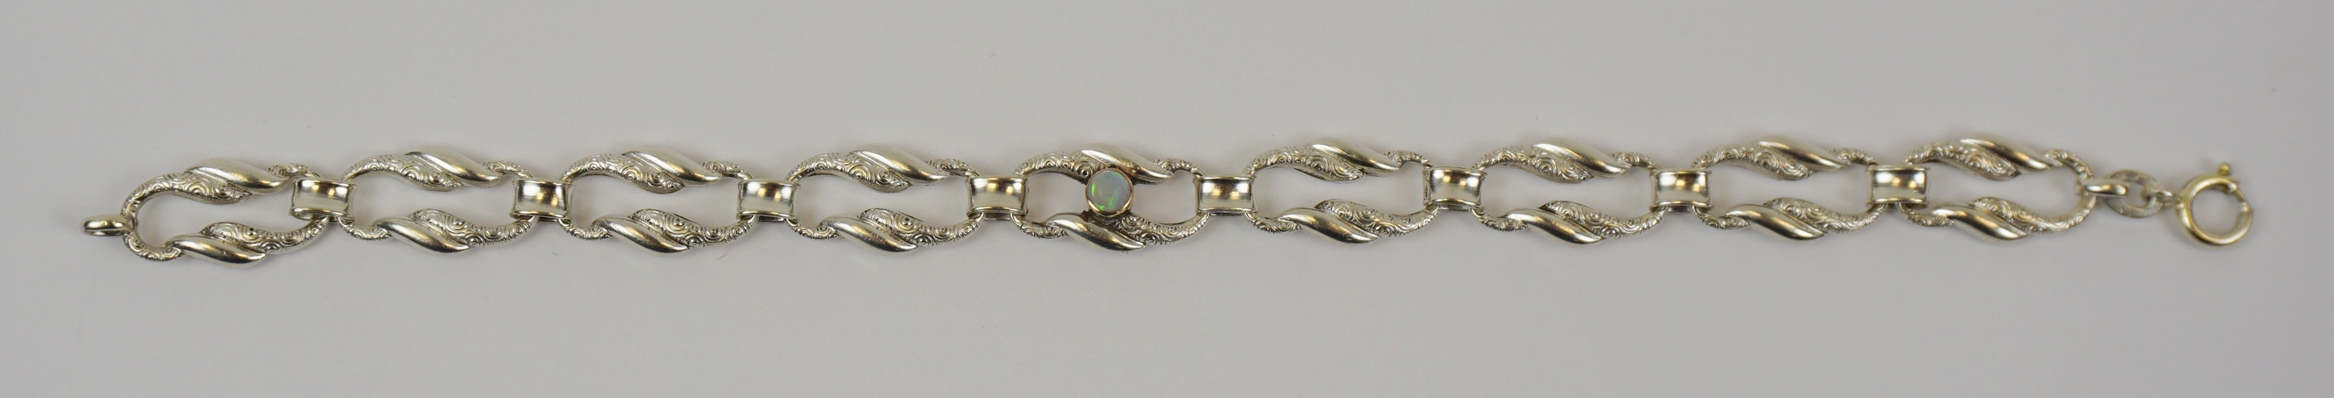 Armband mit Opal, 835er Silber, Gew.13,22g - Image 3 of 3